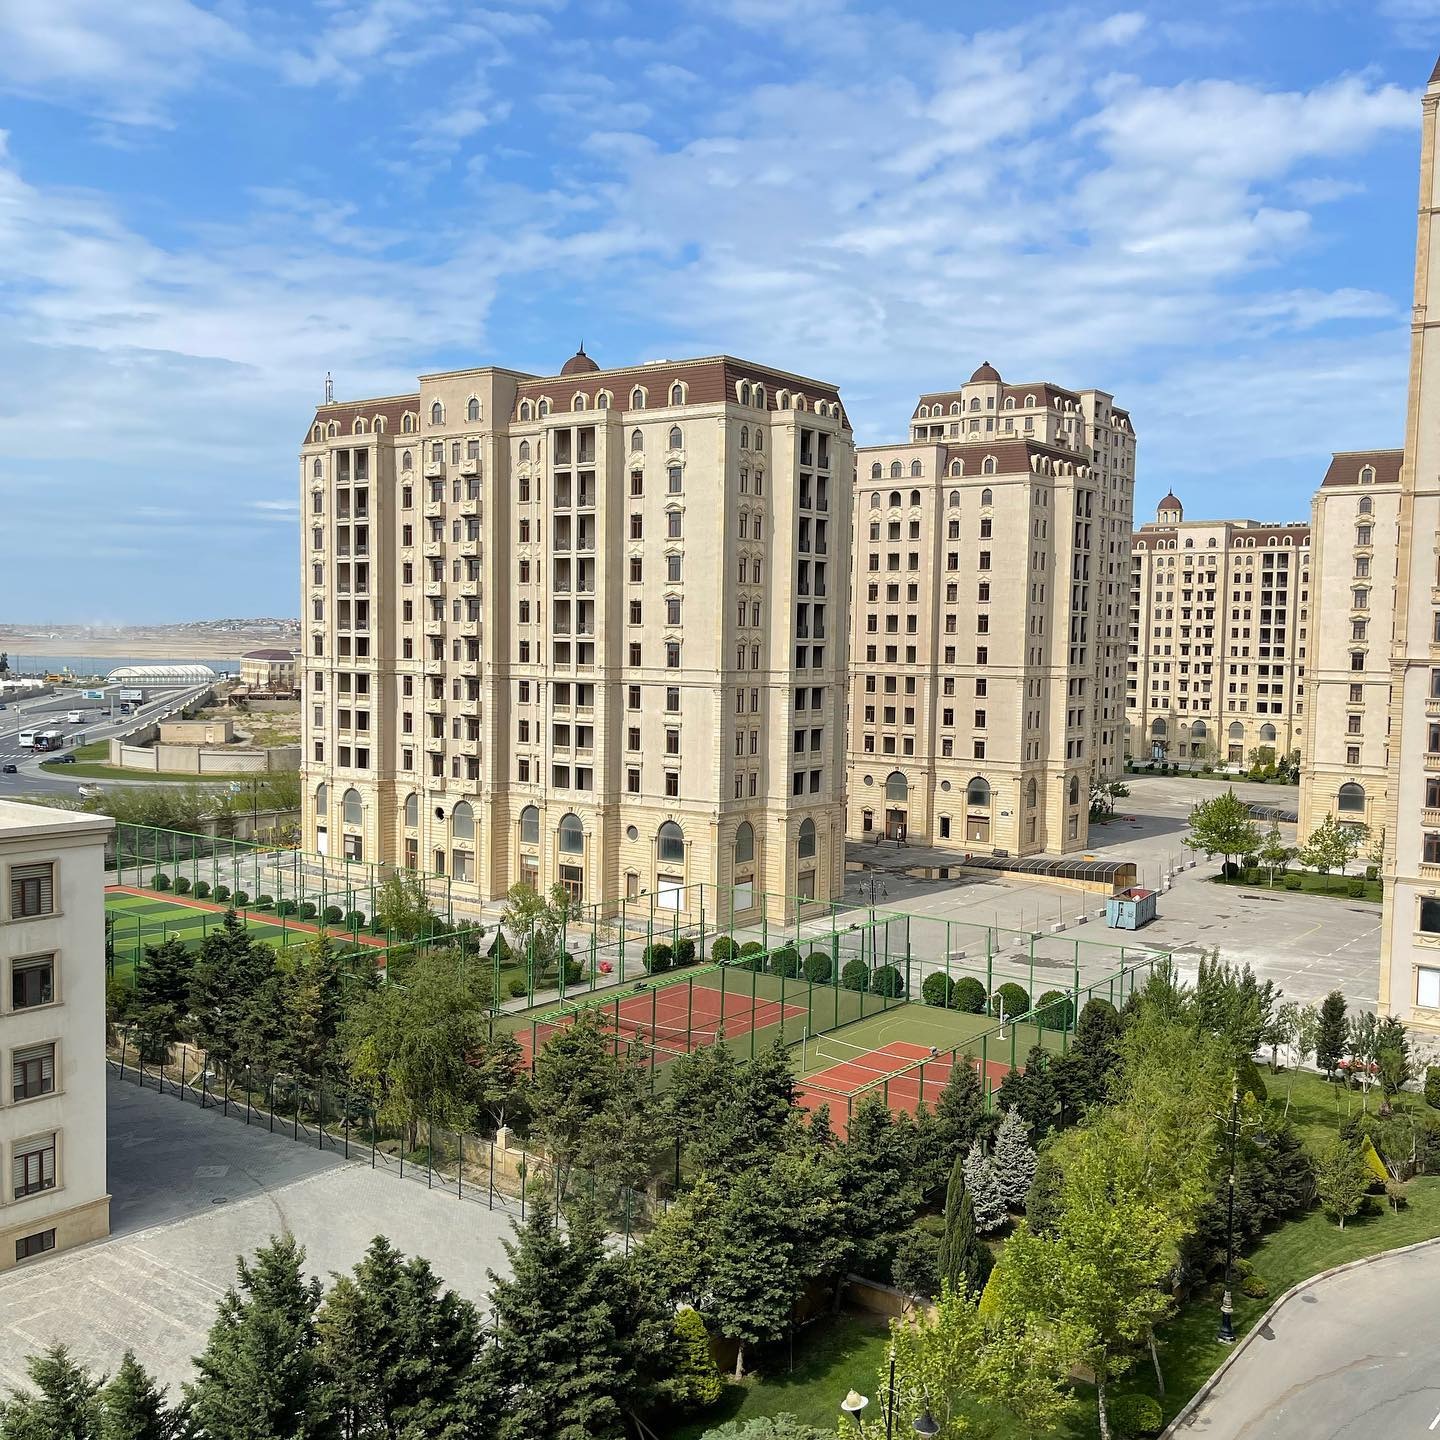 Апартаменты New Zeon в Баку, где живёт Ребекка